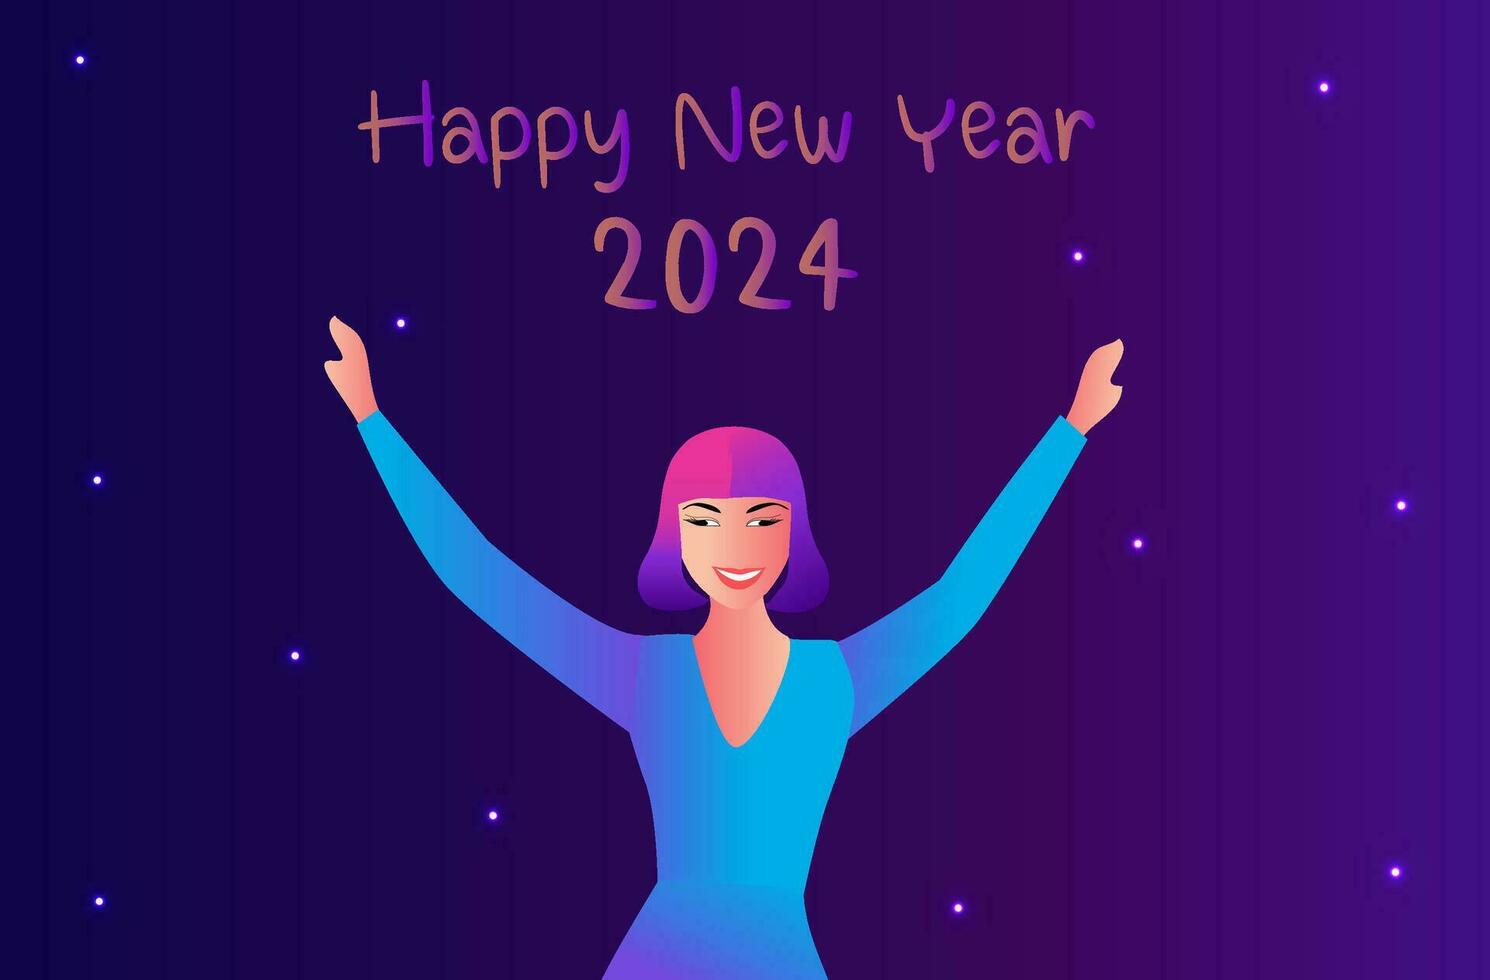 Happy new year 2024 celebration concept vector illustration. Celebration festive season concept.